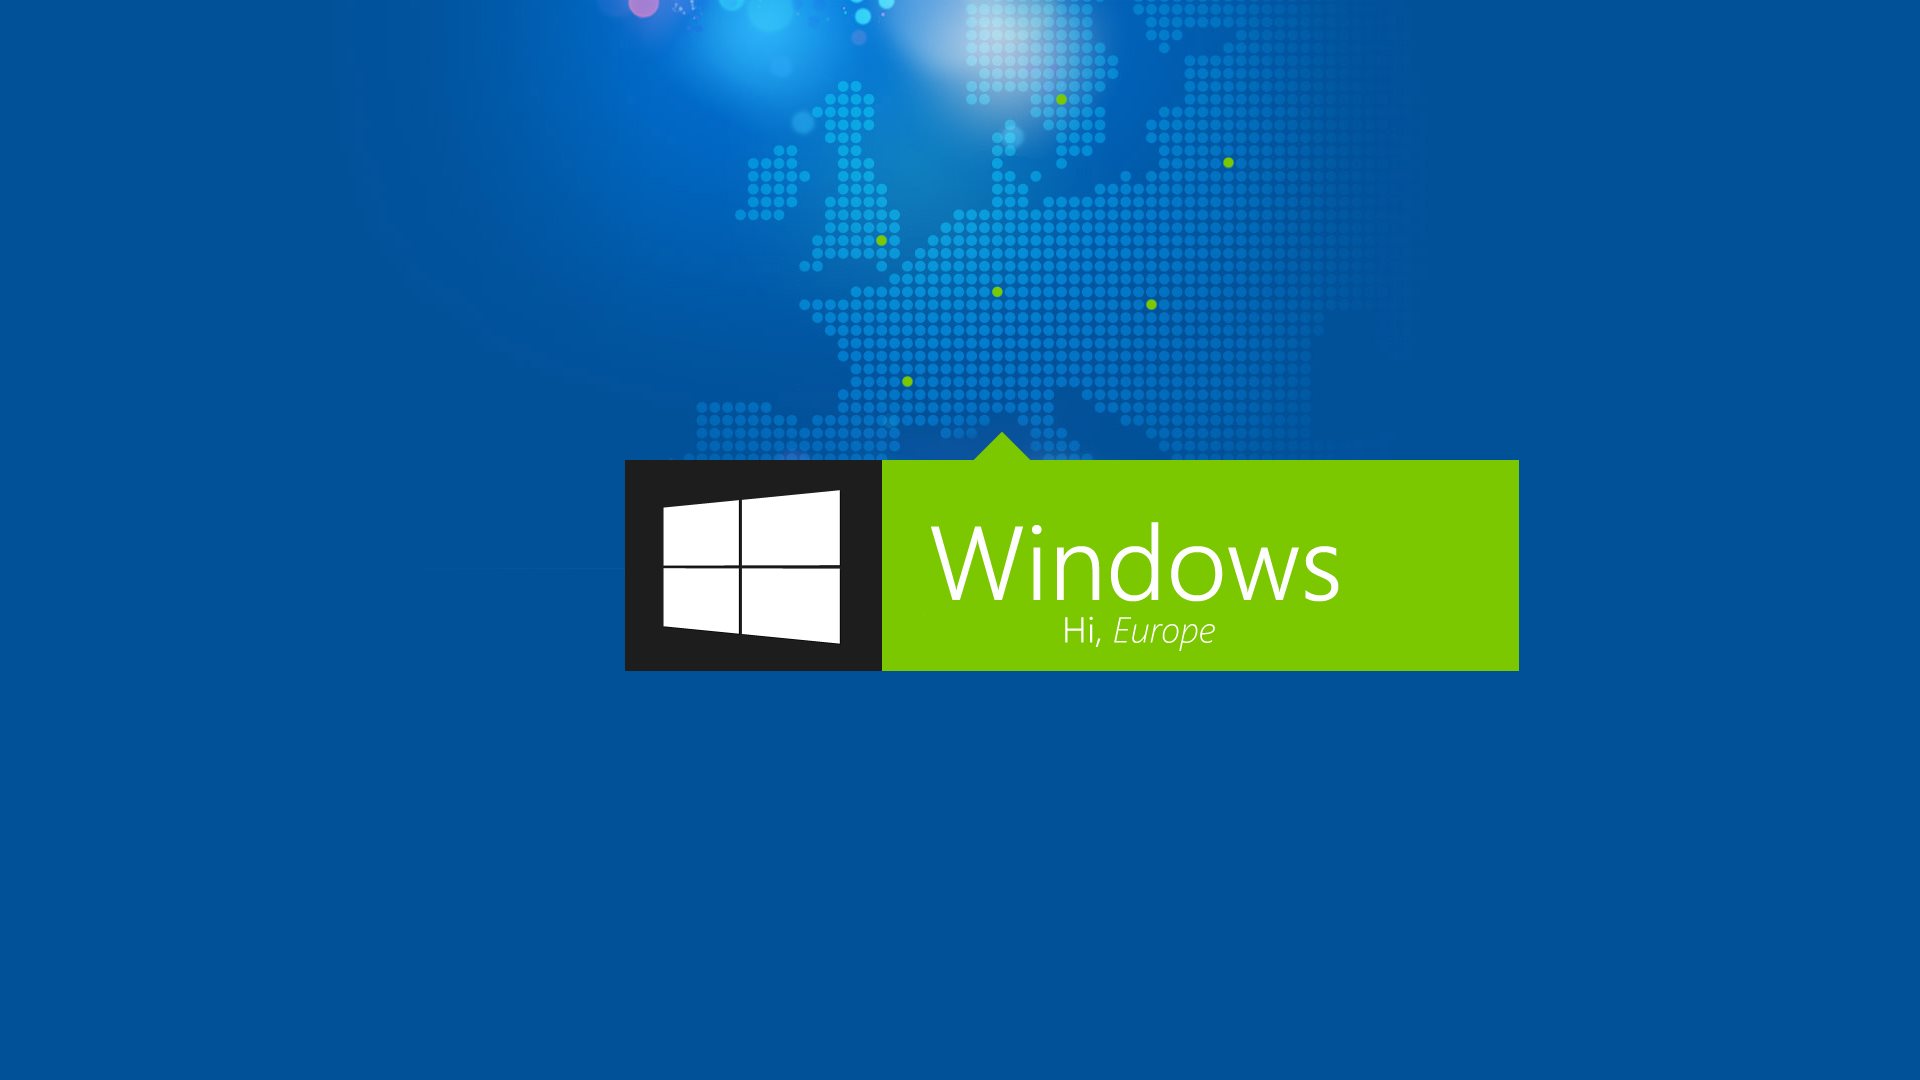 Microsoft Windows Wallpaper HD